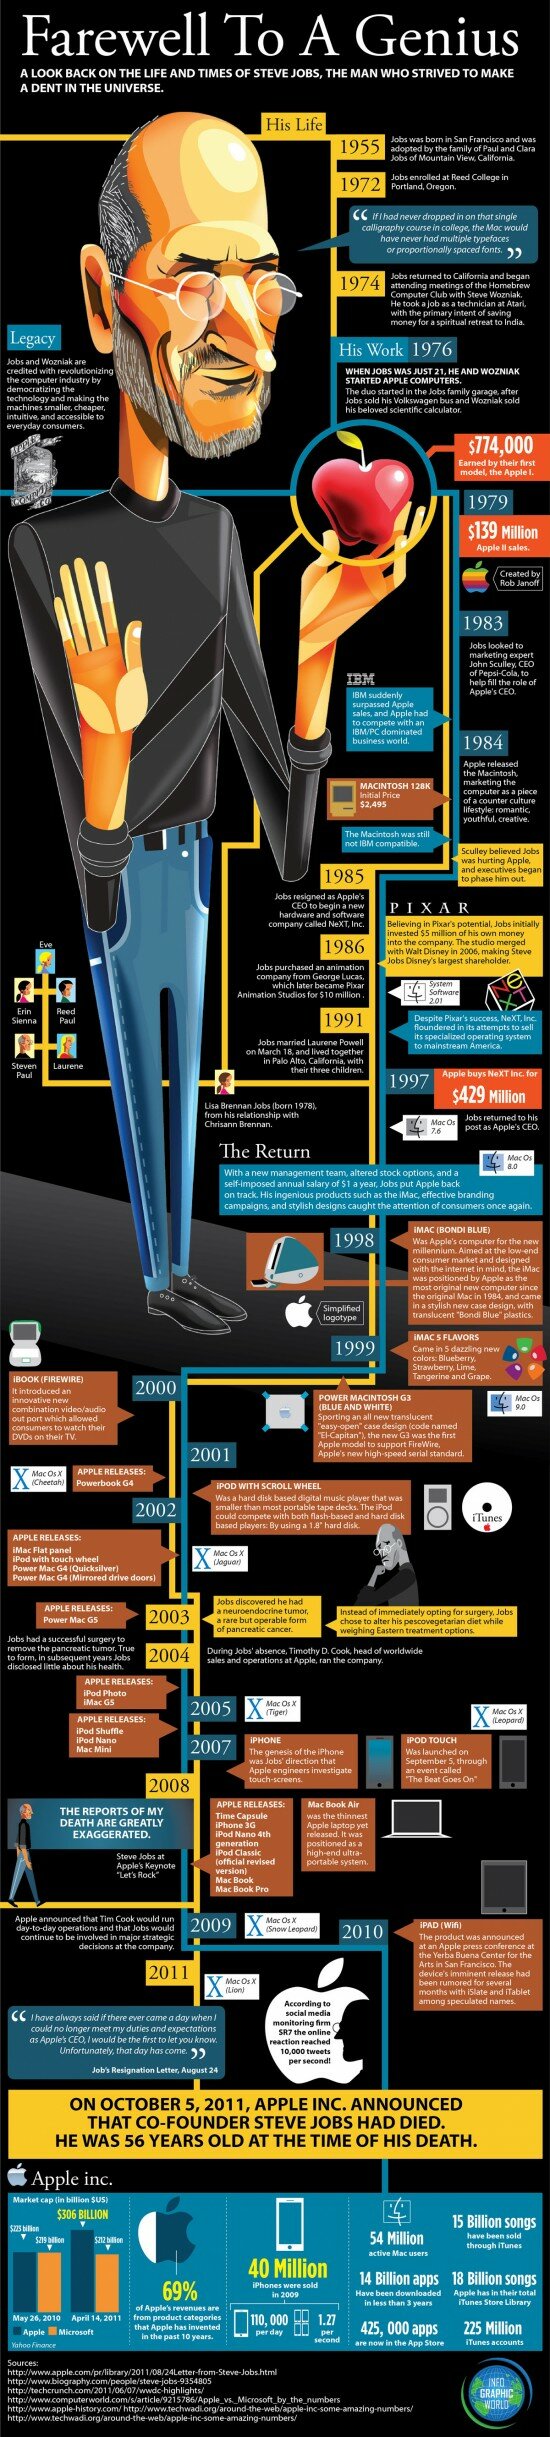 Steve Jobs biography infographic